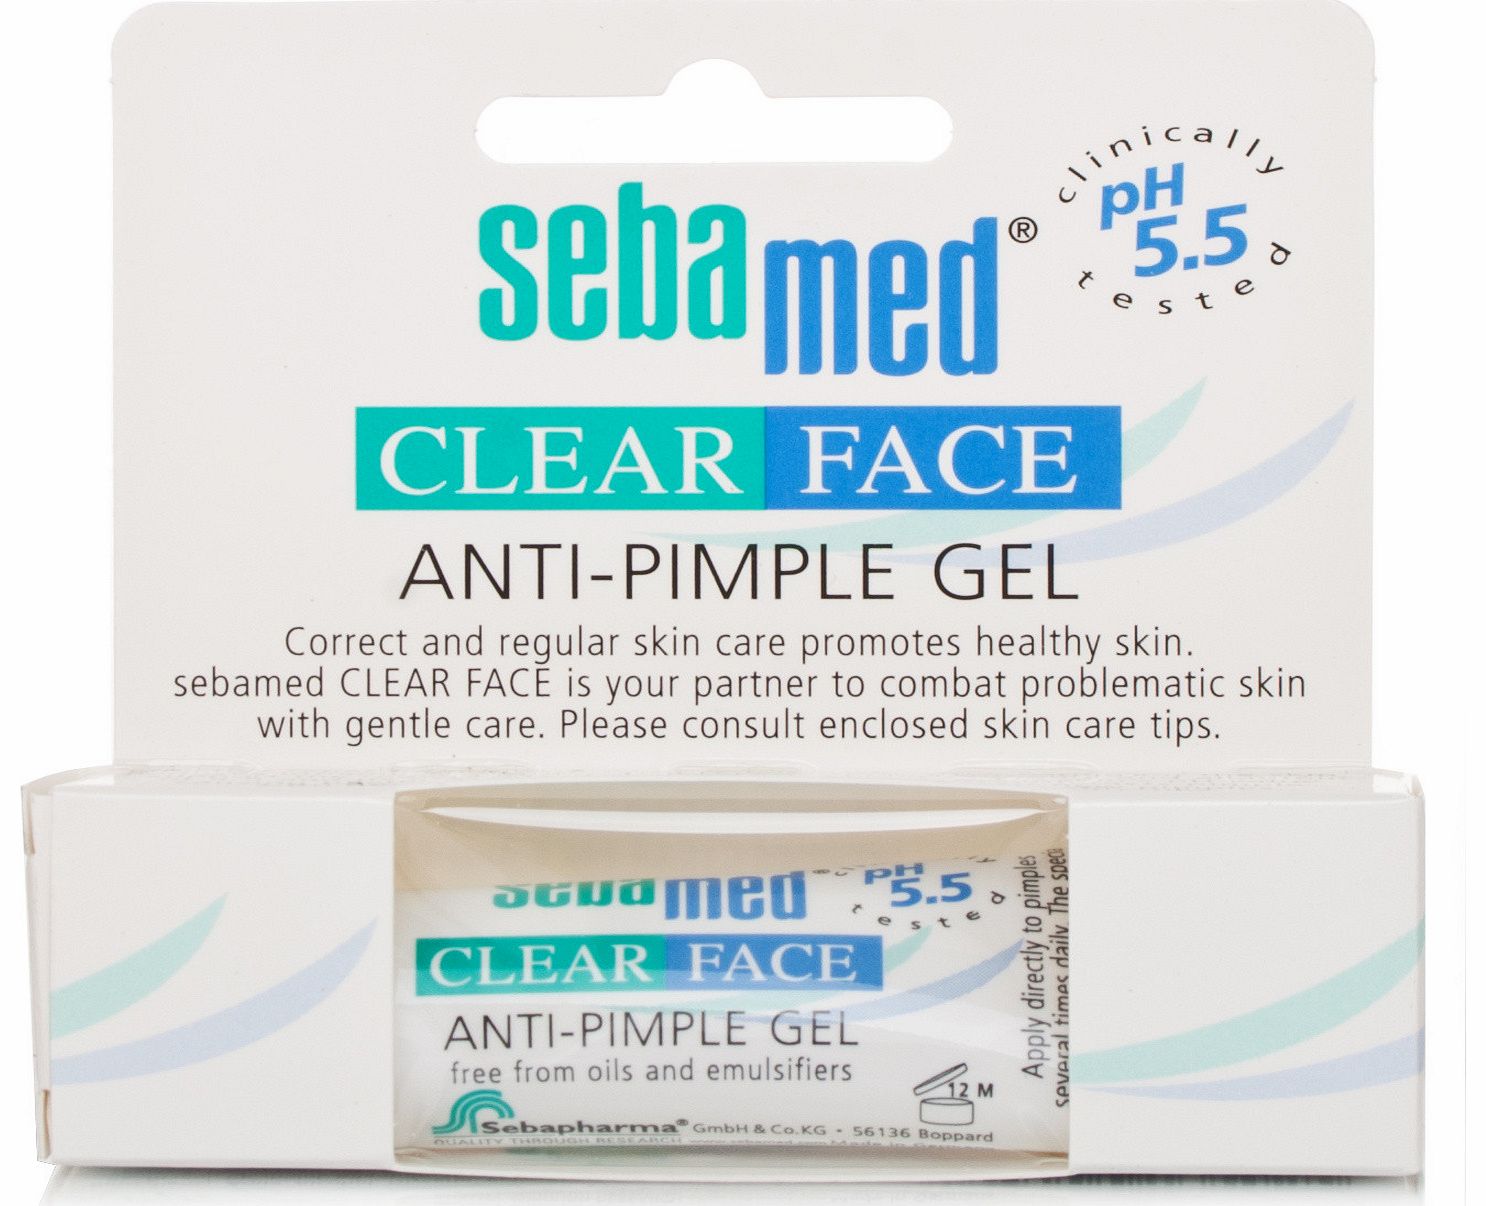 Clear Face Anti-Pimple Gel